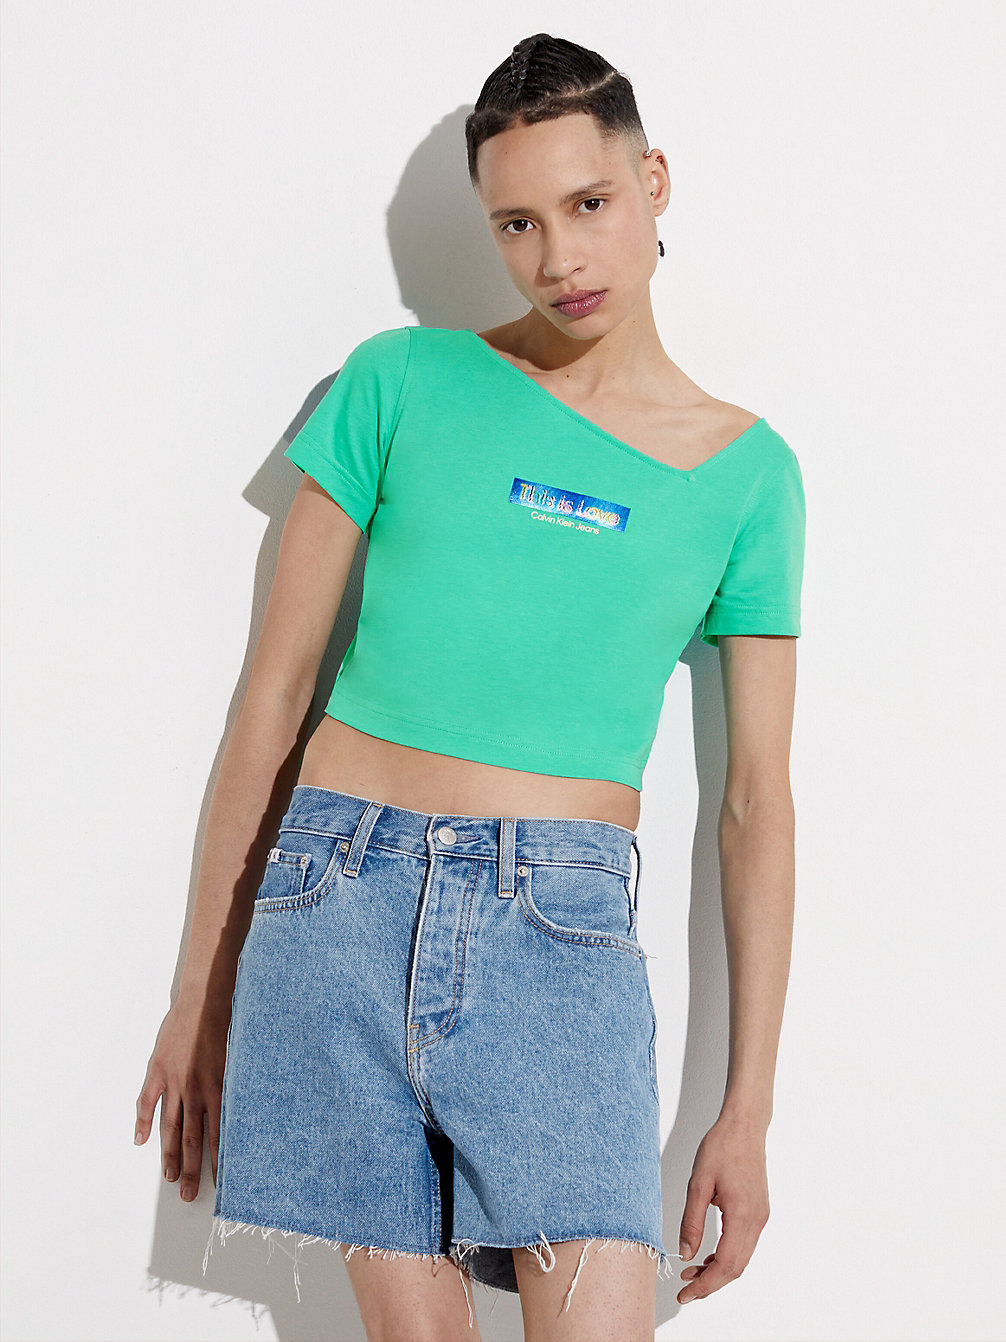 Camiseta Cropped Slim - Pride > AQUA GREEN > undefined mujer > Calvin Klein